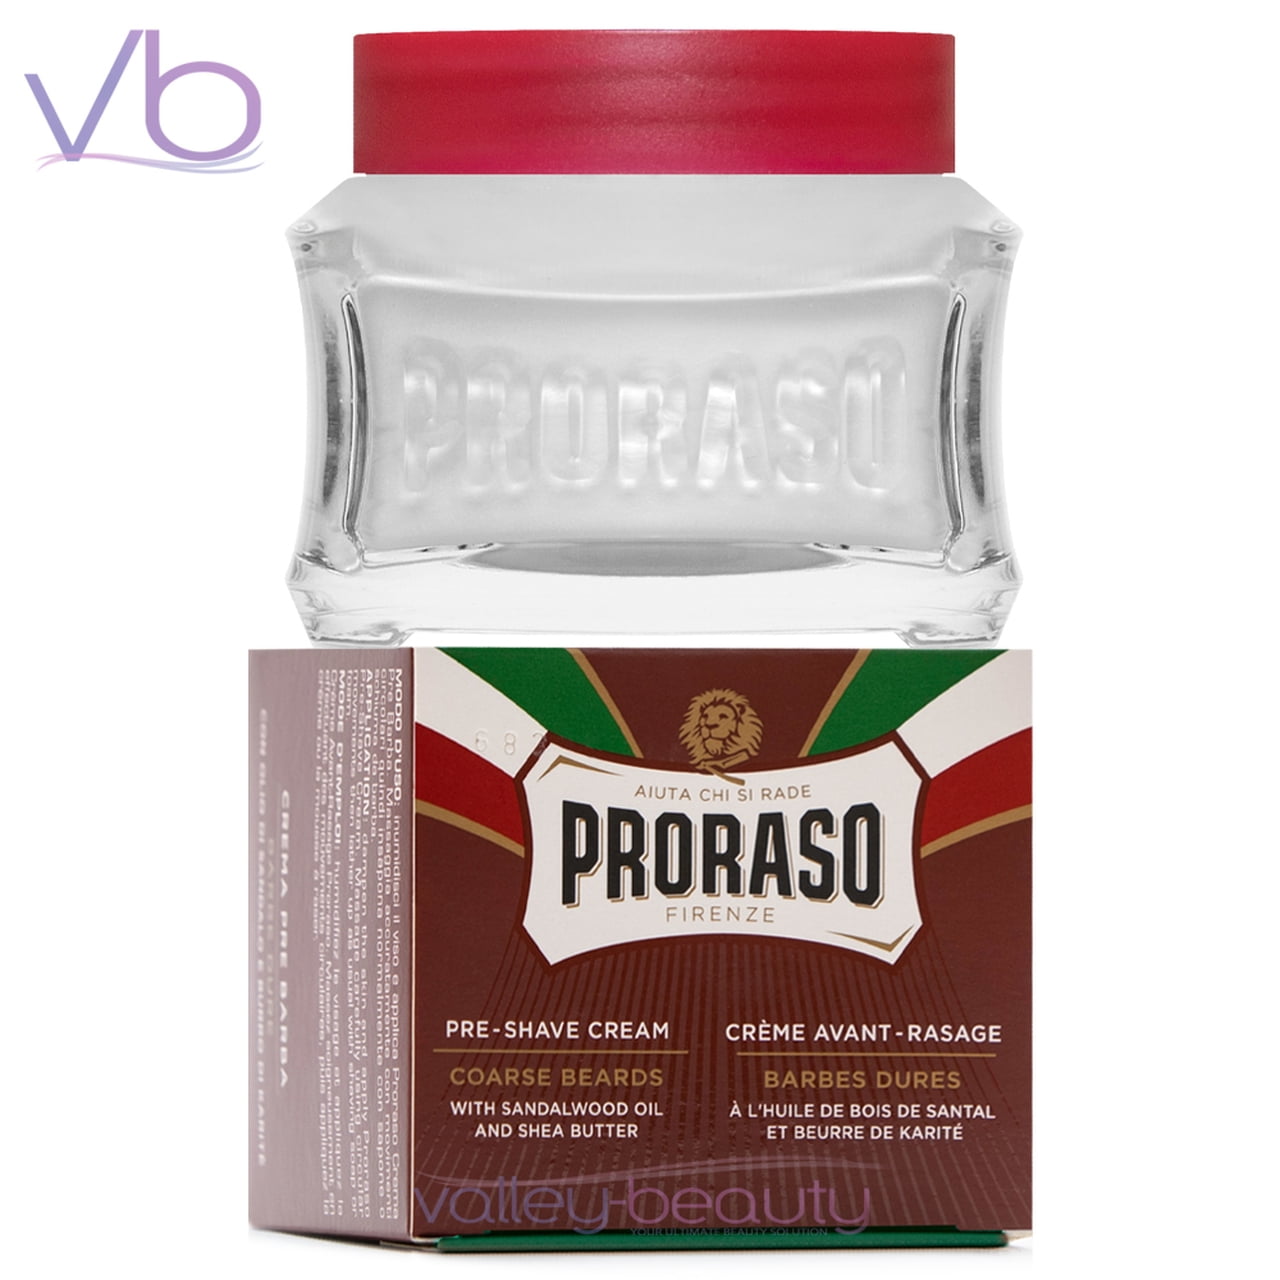 Proraso Red Pre Shave Cream For Coarse Beard With Shea Butter Sandal Oil Oz Walmart Com